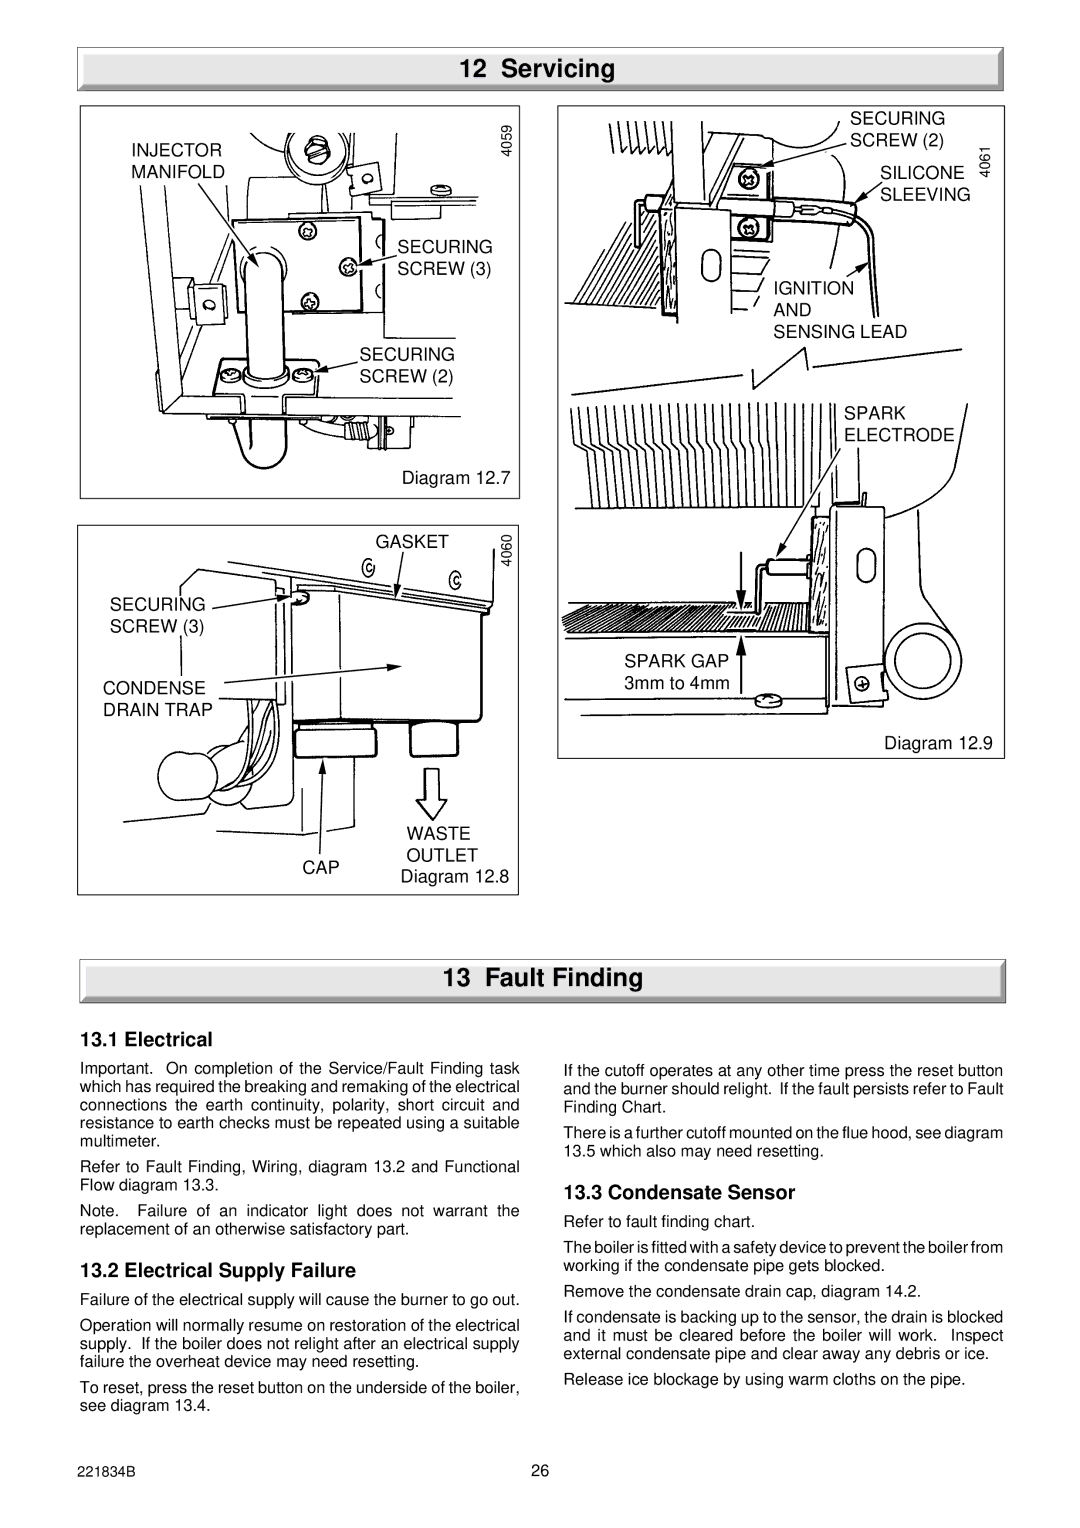 Glowworm Lighting 40 manual Fault Finding, Electrical, Condensate Sensor 